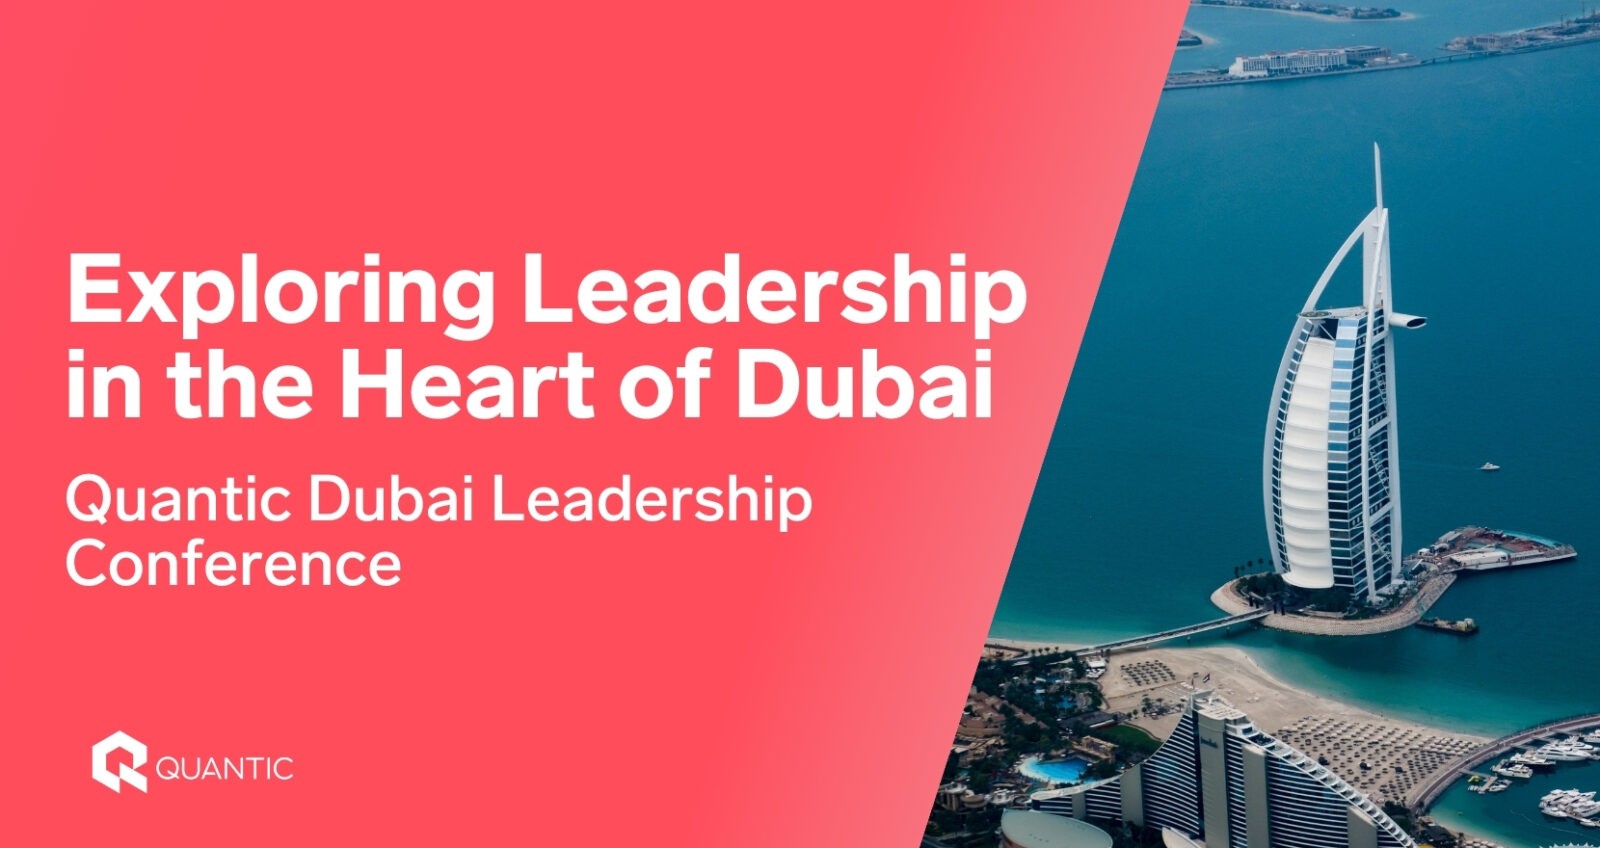 MBA global leadership conference in Dubai